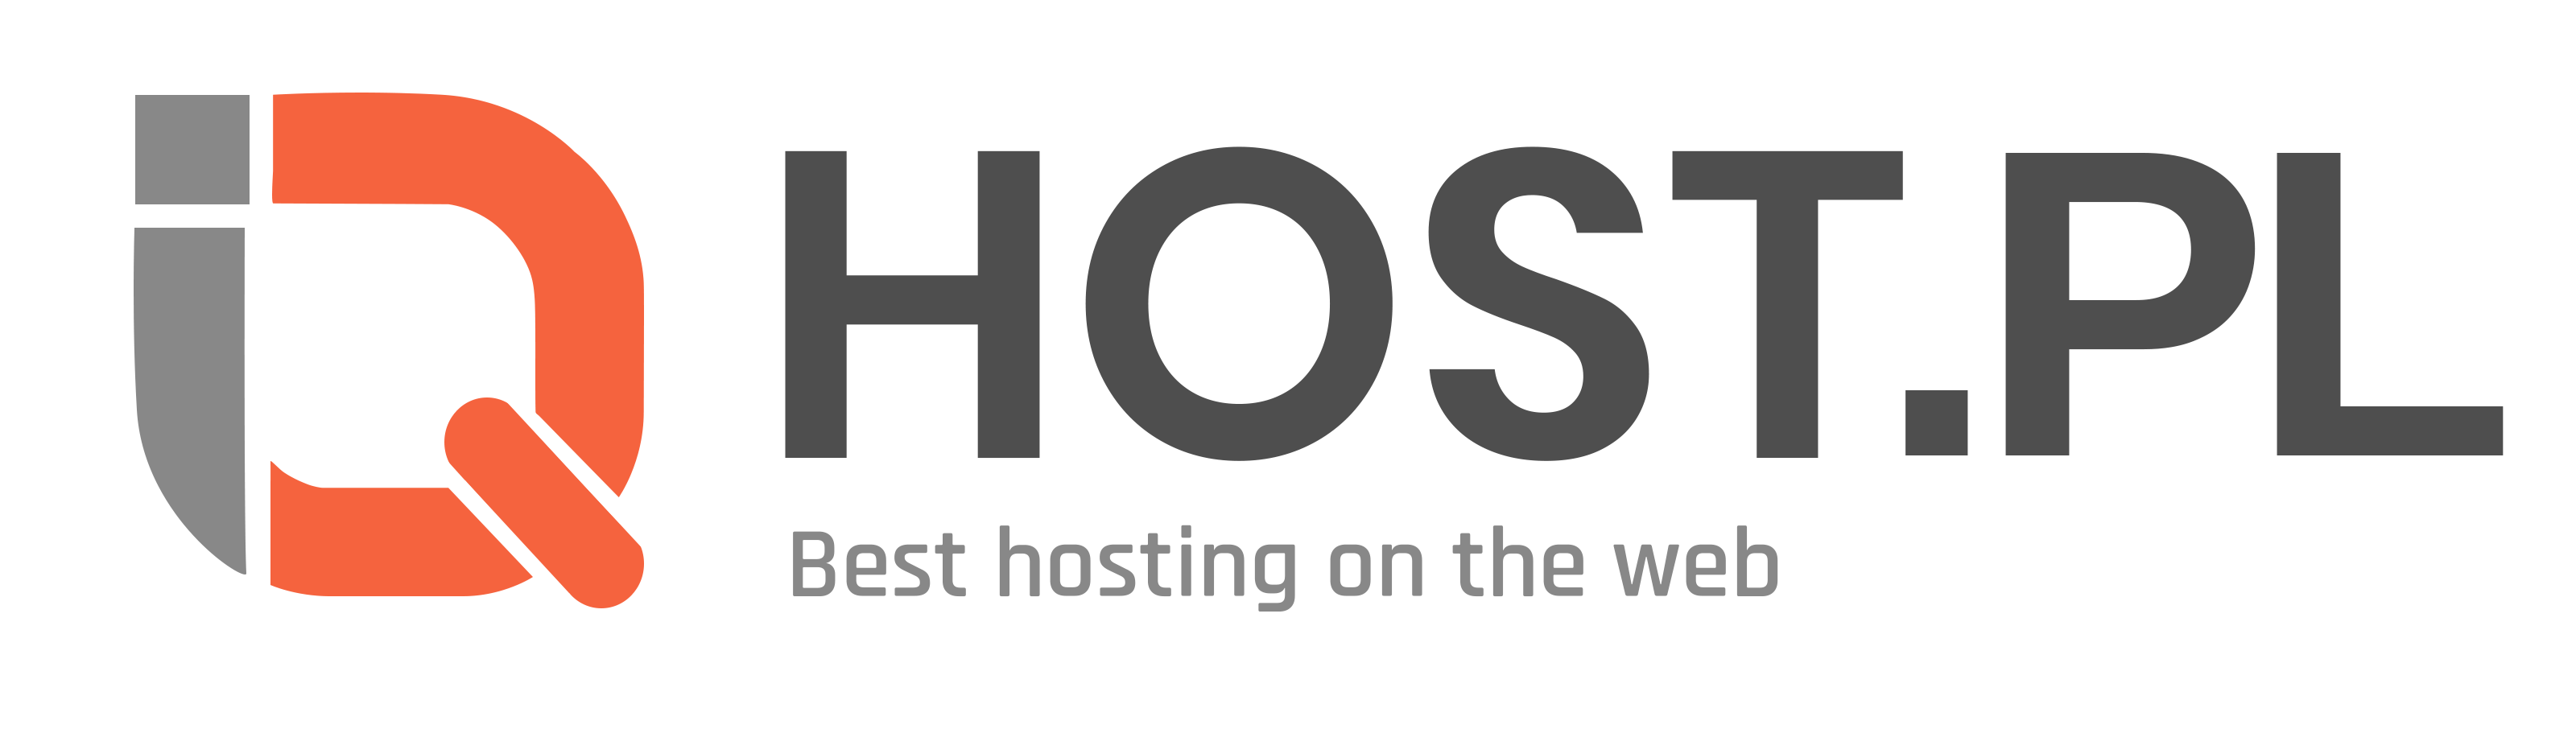 Tani Hosting Stron | Hosting WordPress i VPS | IQhost.pl - IQhost.pl Logo